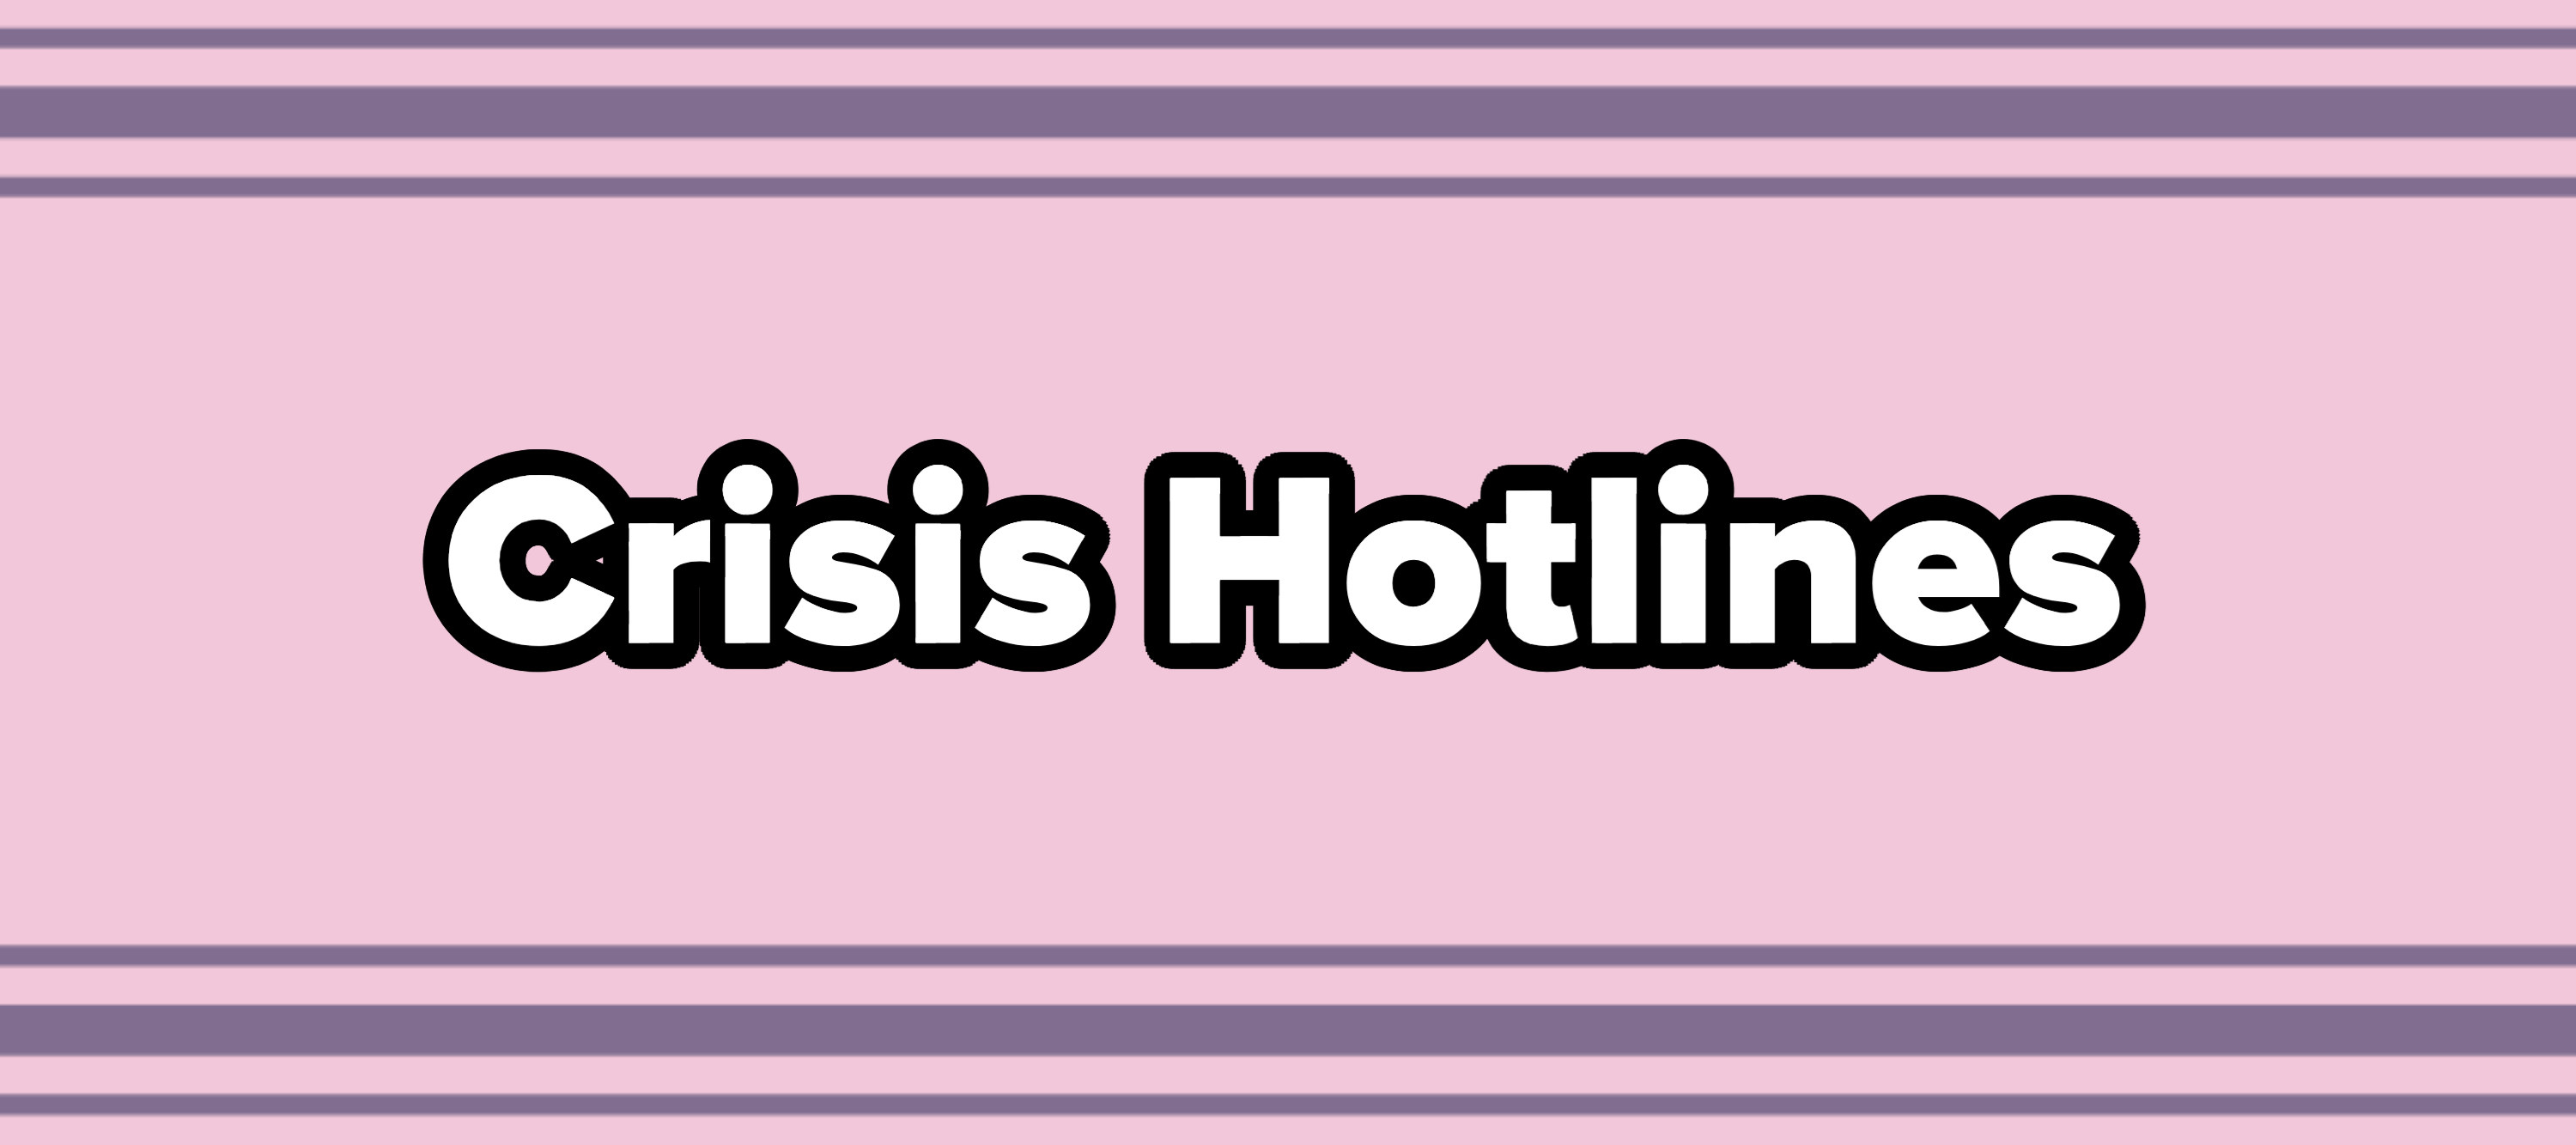 Crisis Hotlines